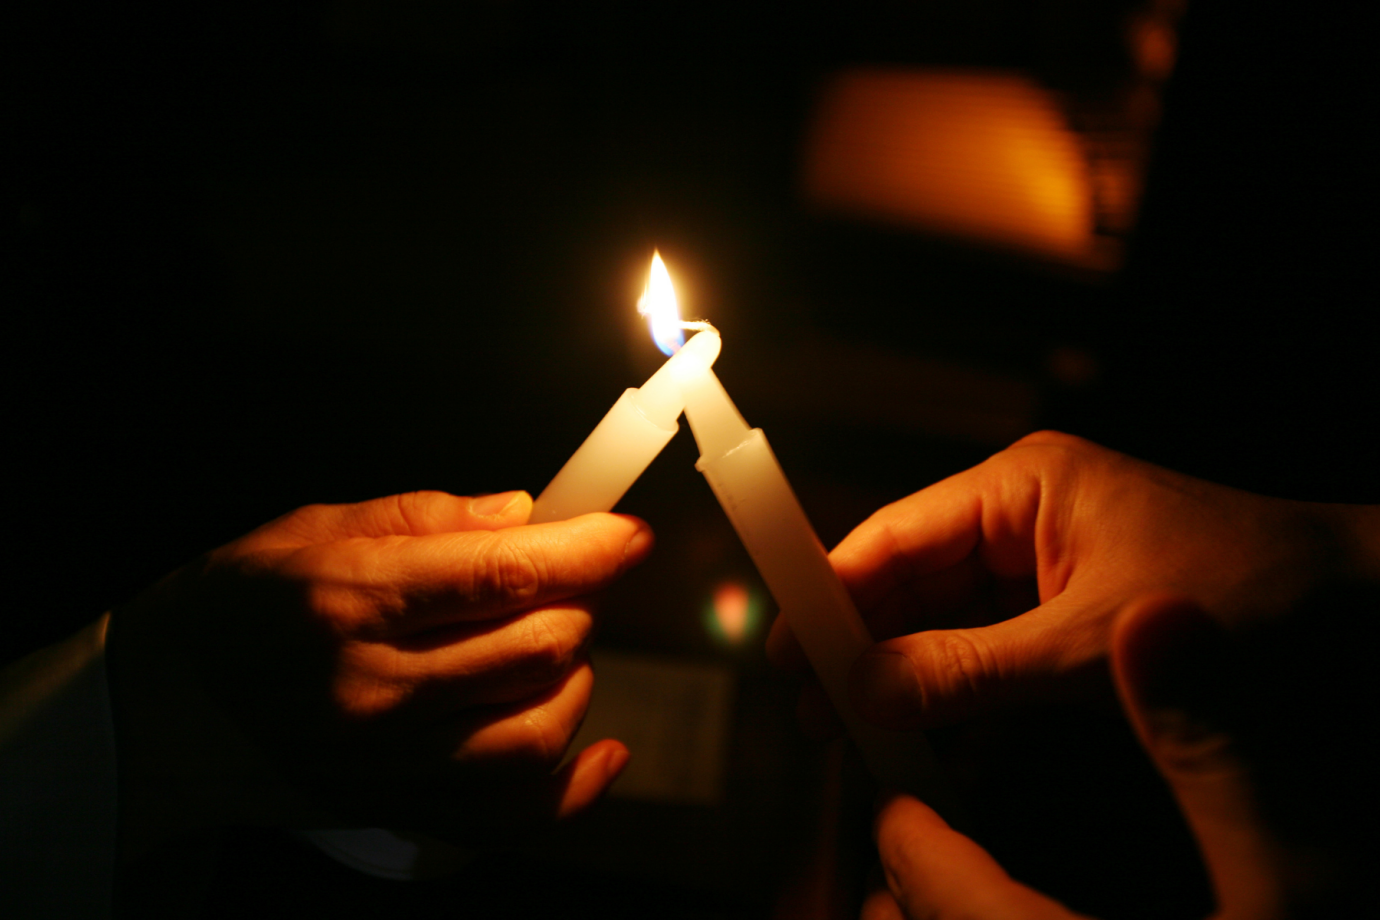 Traditional Candlelight Worship